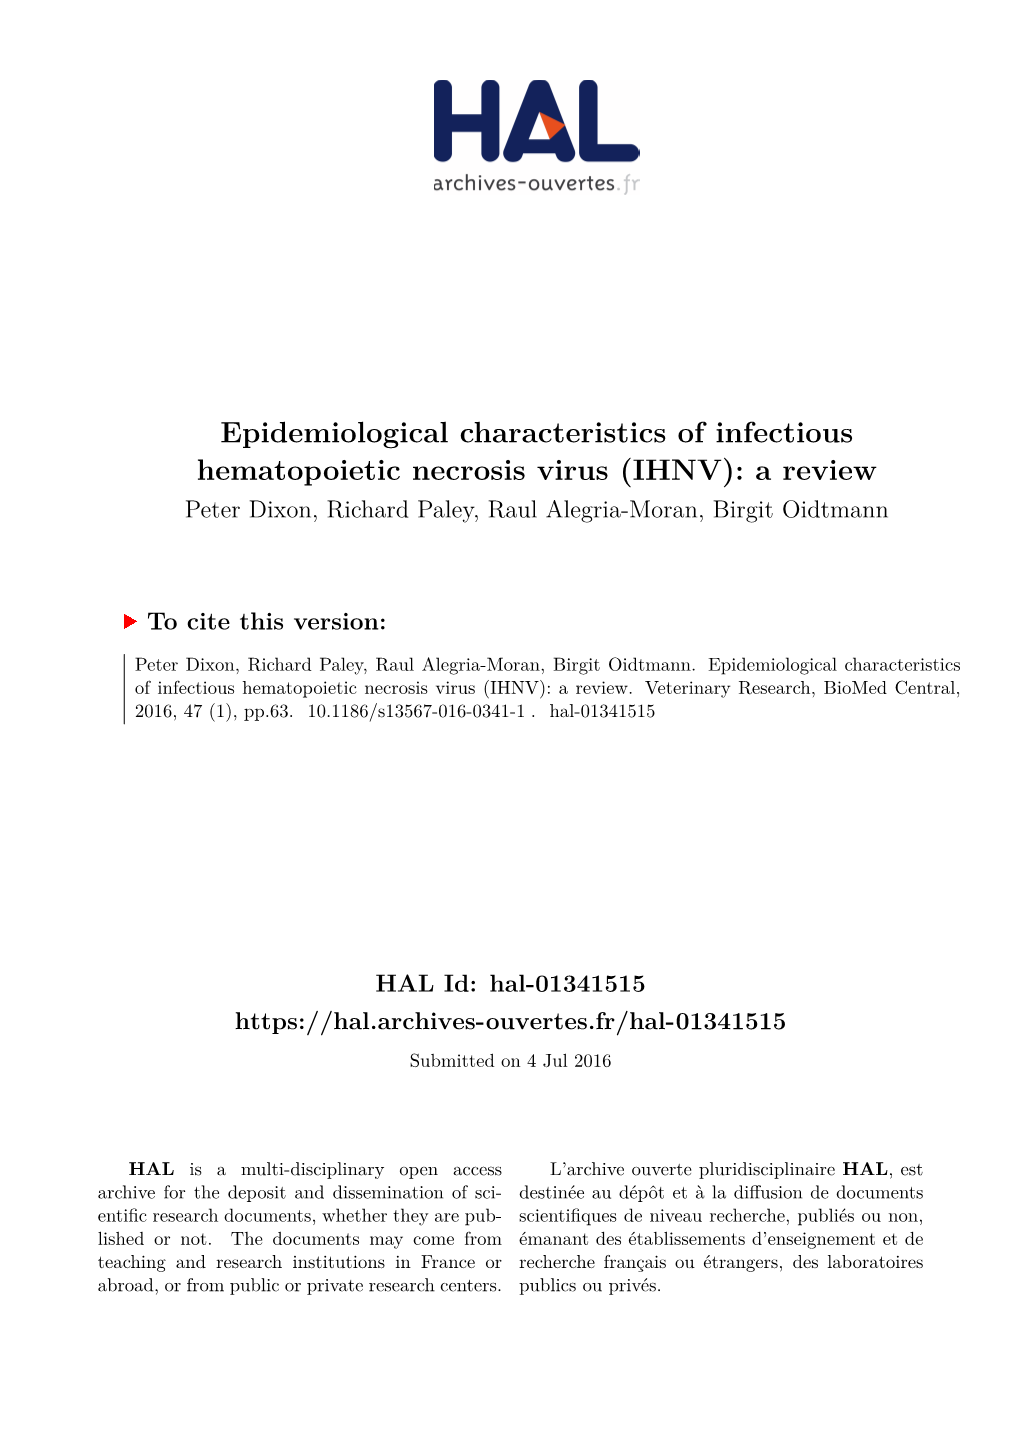 Epidemiological Characteristics of Infectious Hematopoietic Necrosis Virus (IHNV): a Review Peter Dixon, Richard Paley, Raul Alegria-Moran, Birgit Oidtmann